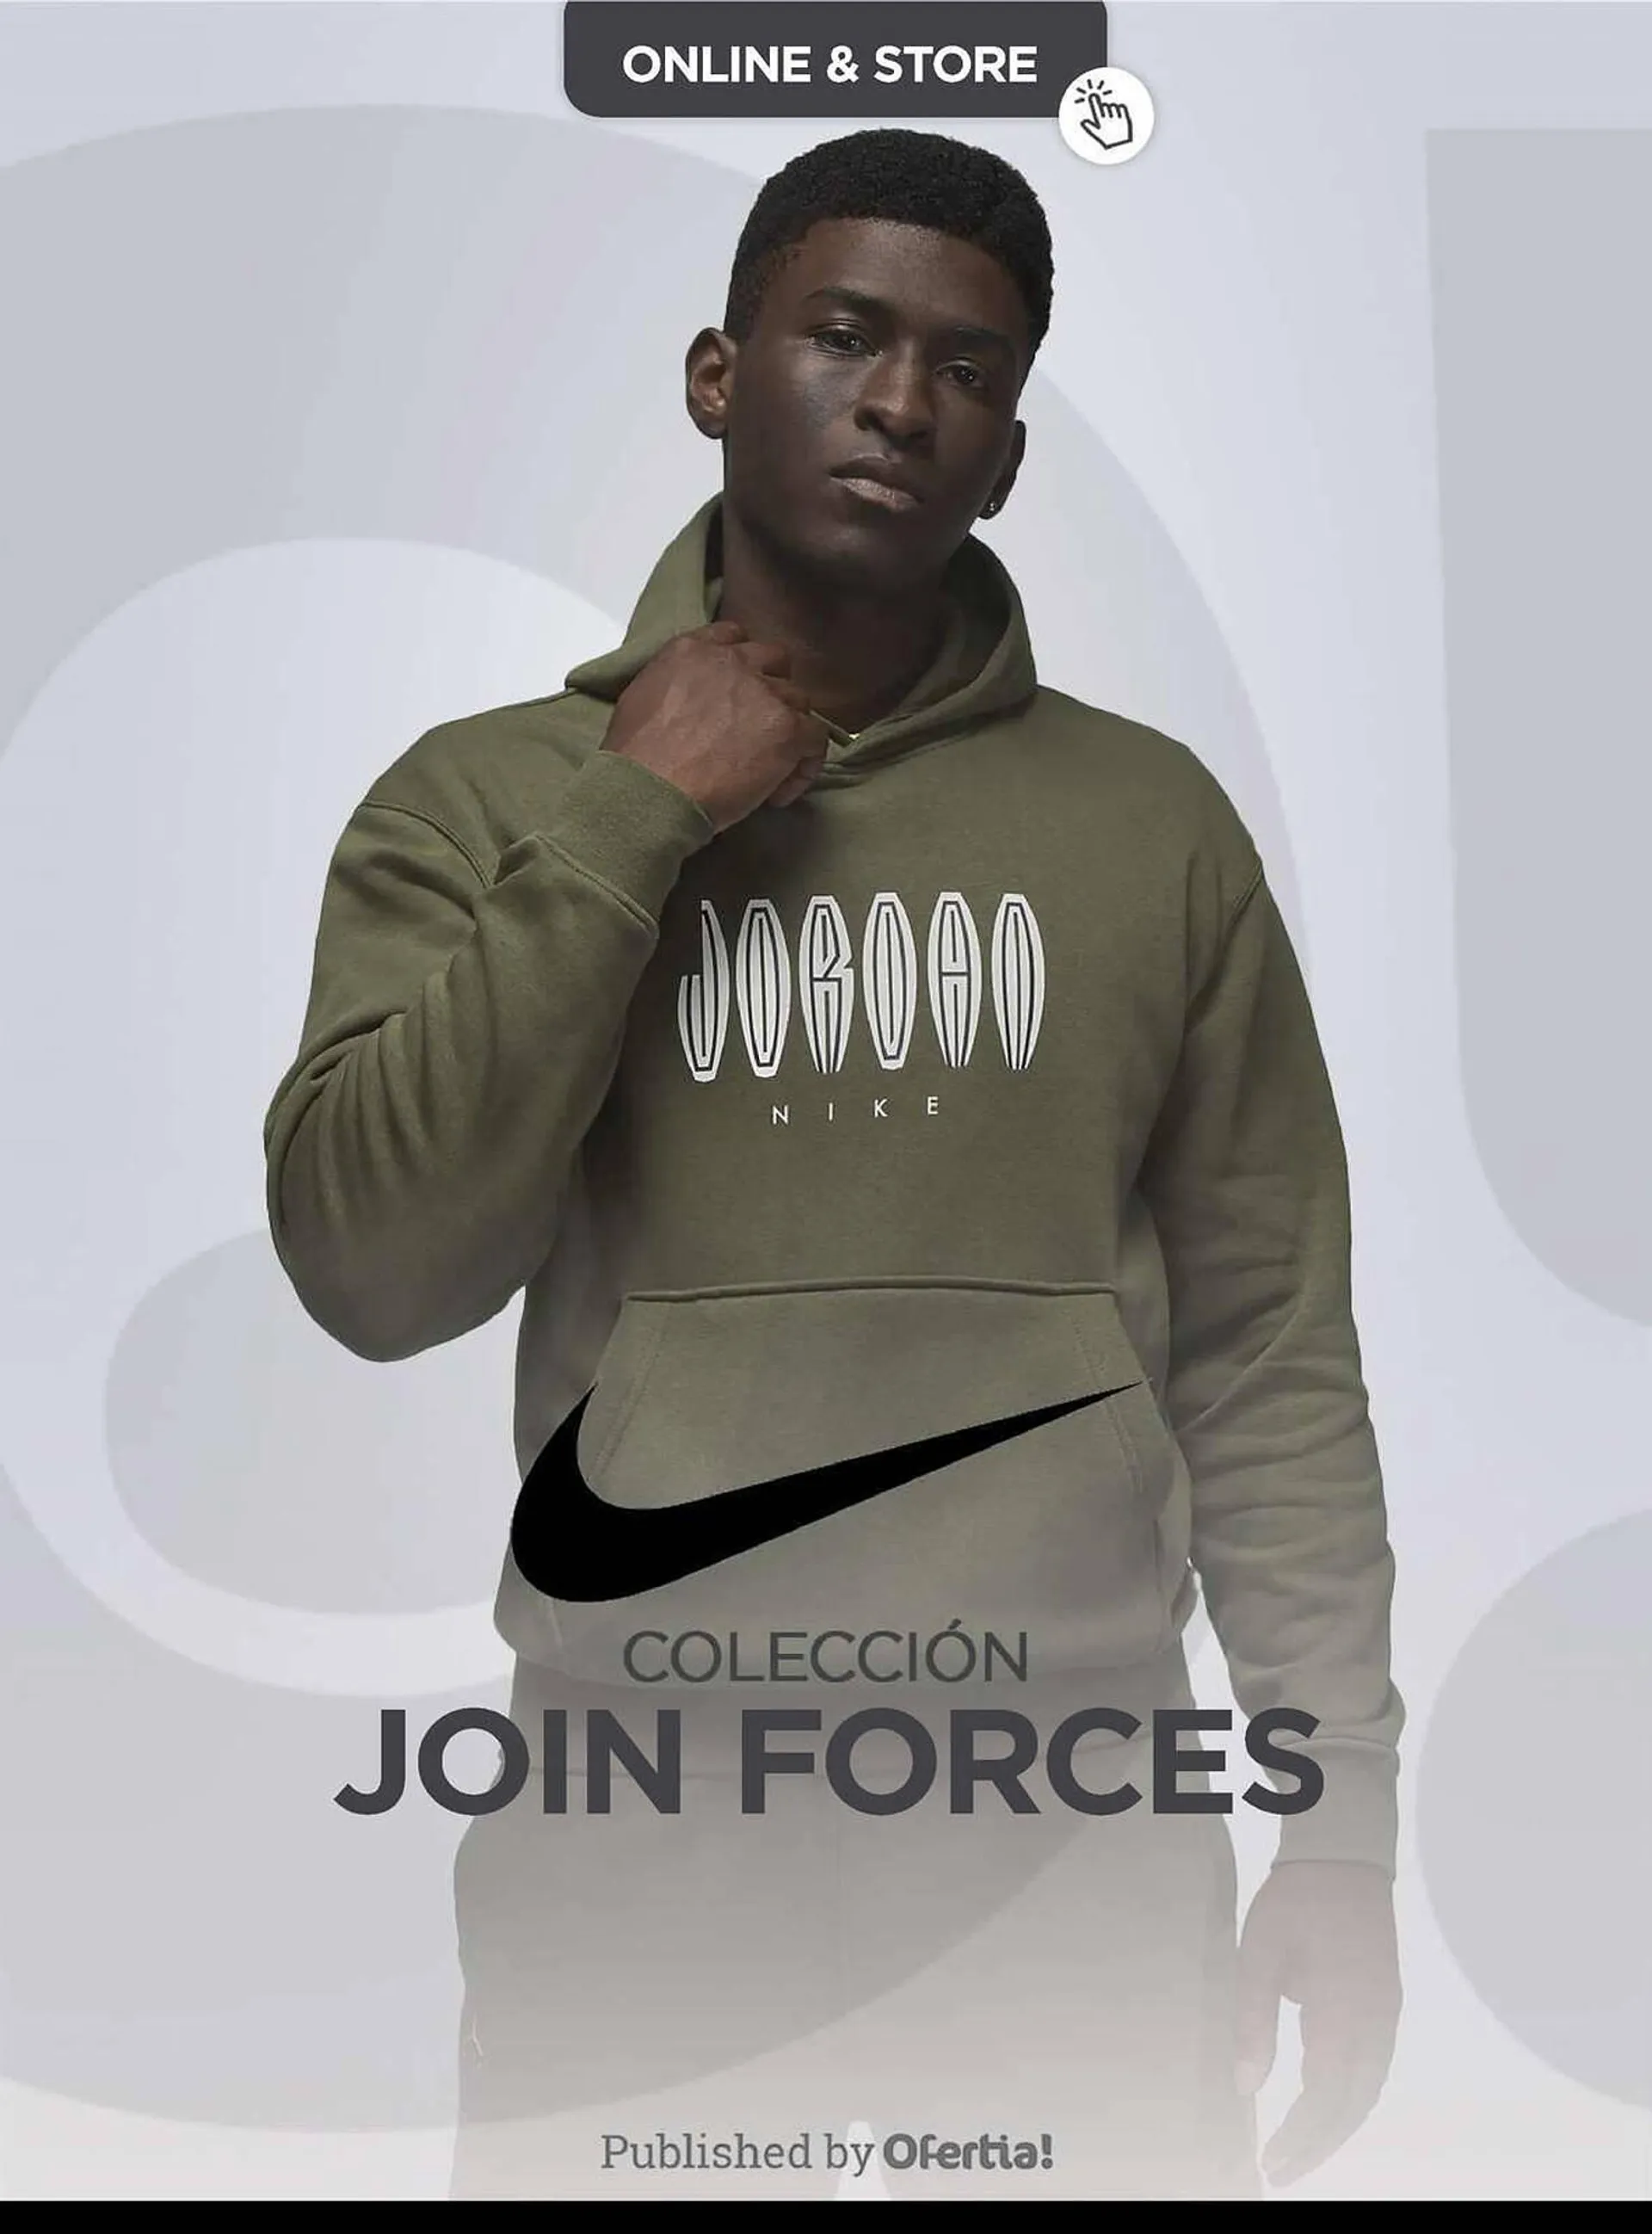 Nike reklamblad - 1